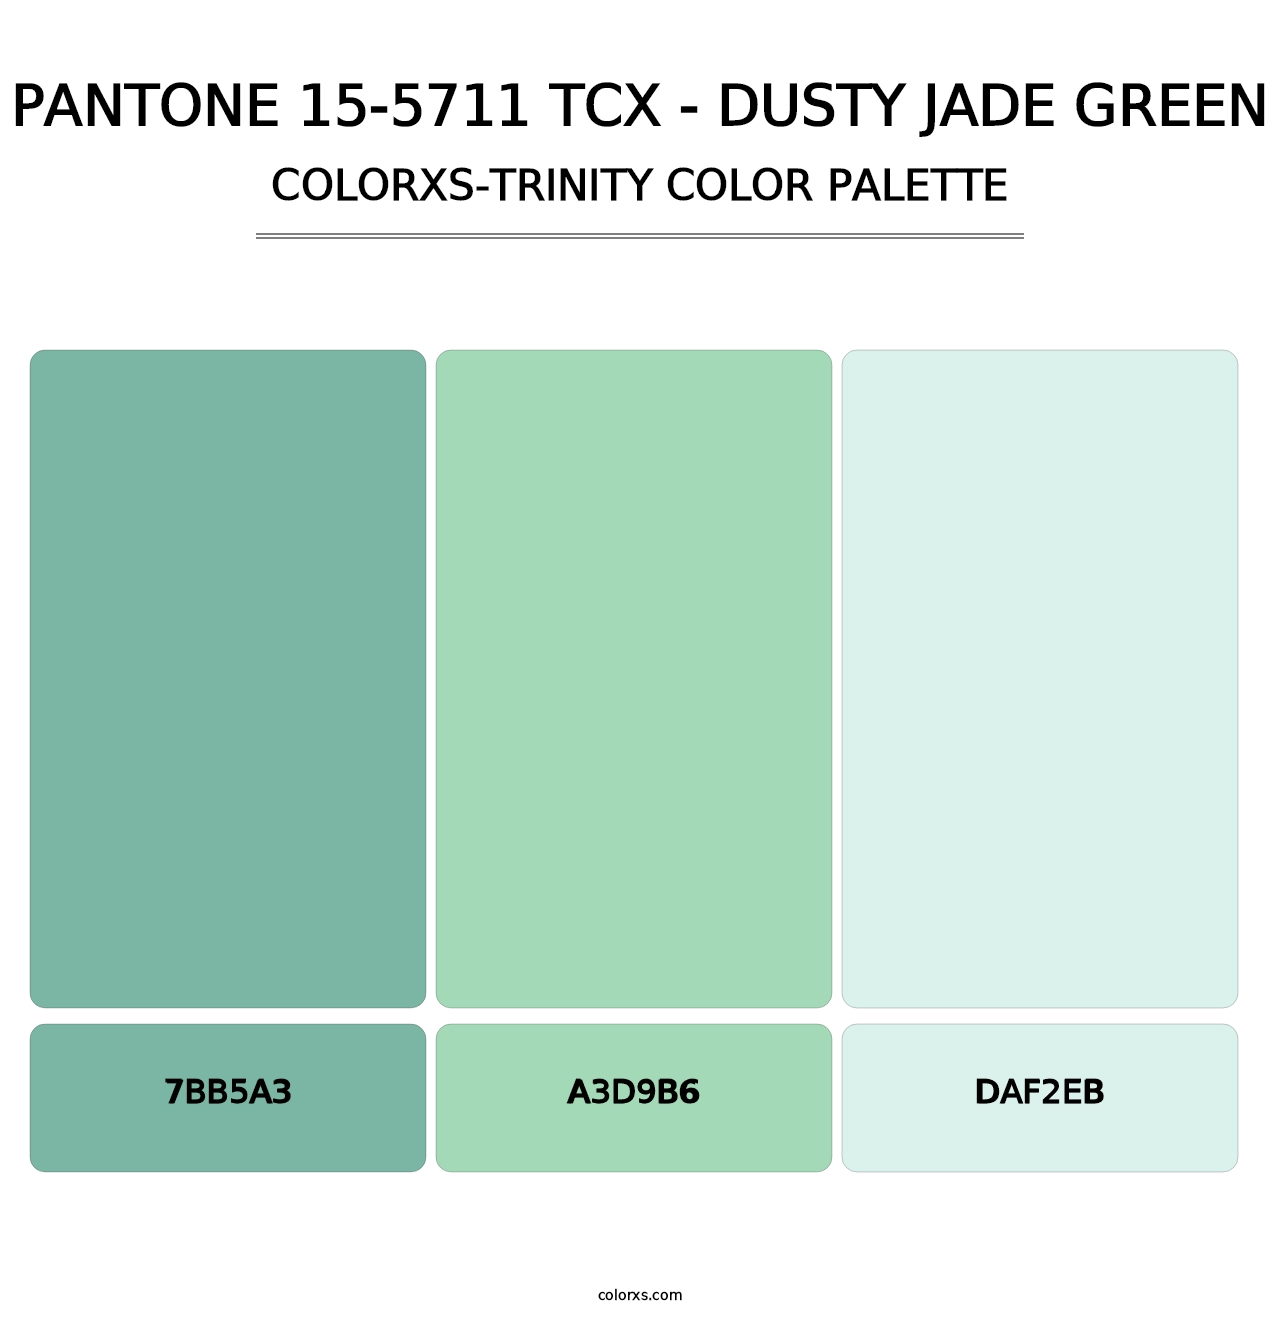 PANTONE 15-5711 TCX - Dusty Jade Green - Colorxs Trinity Palette